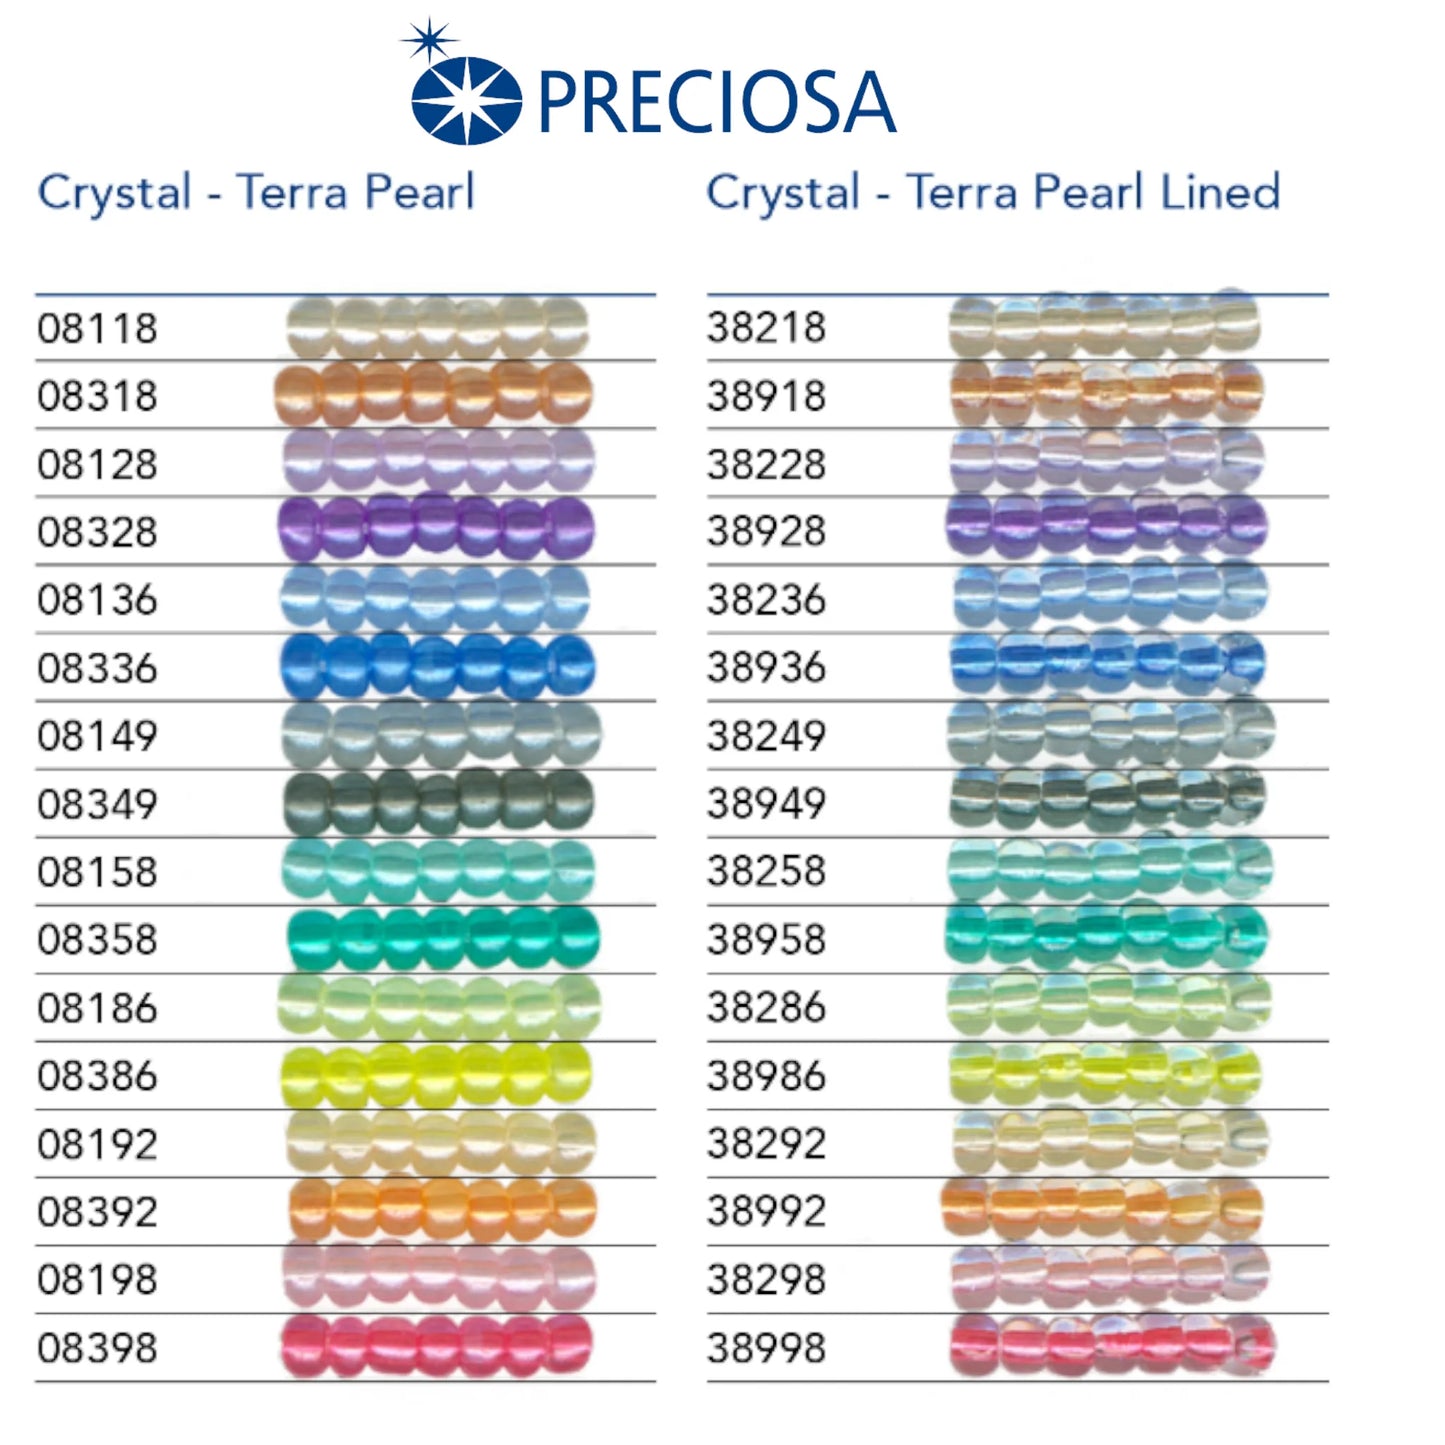 08336 Czech seed beads PRECIOSA Rocailles 10/0 light blue. Crystal - Terra Pearl.